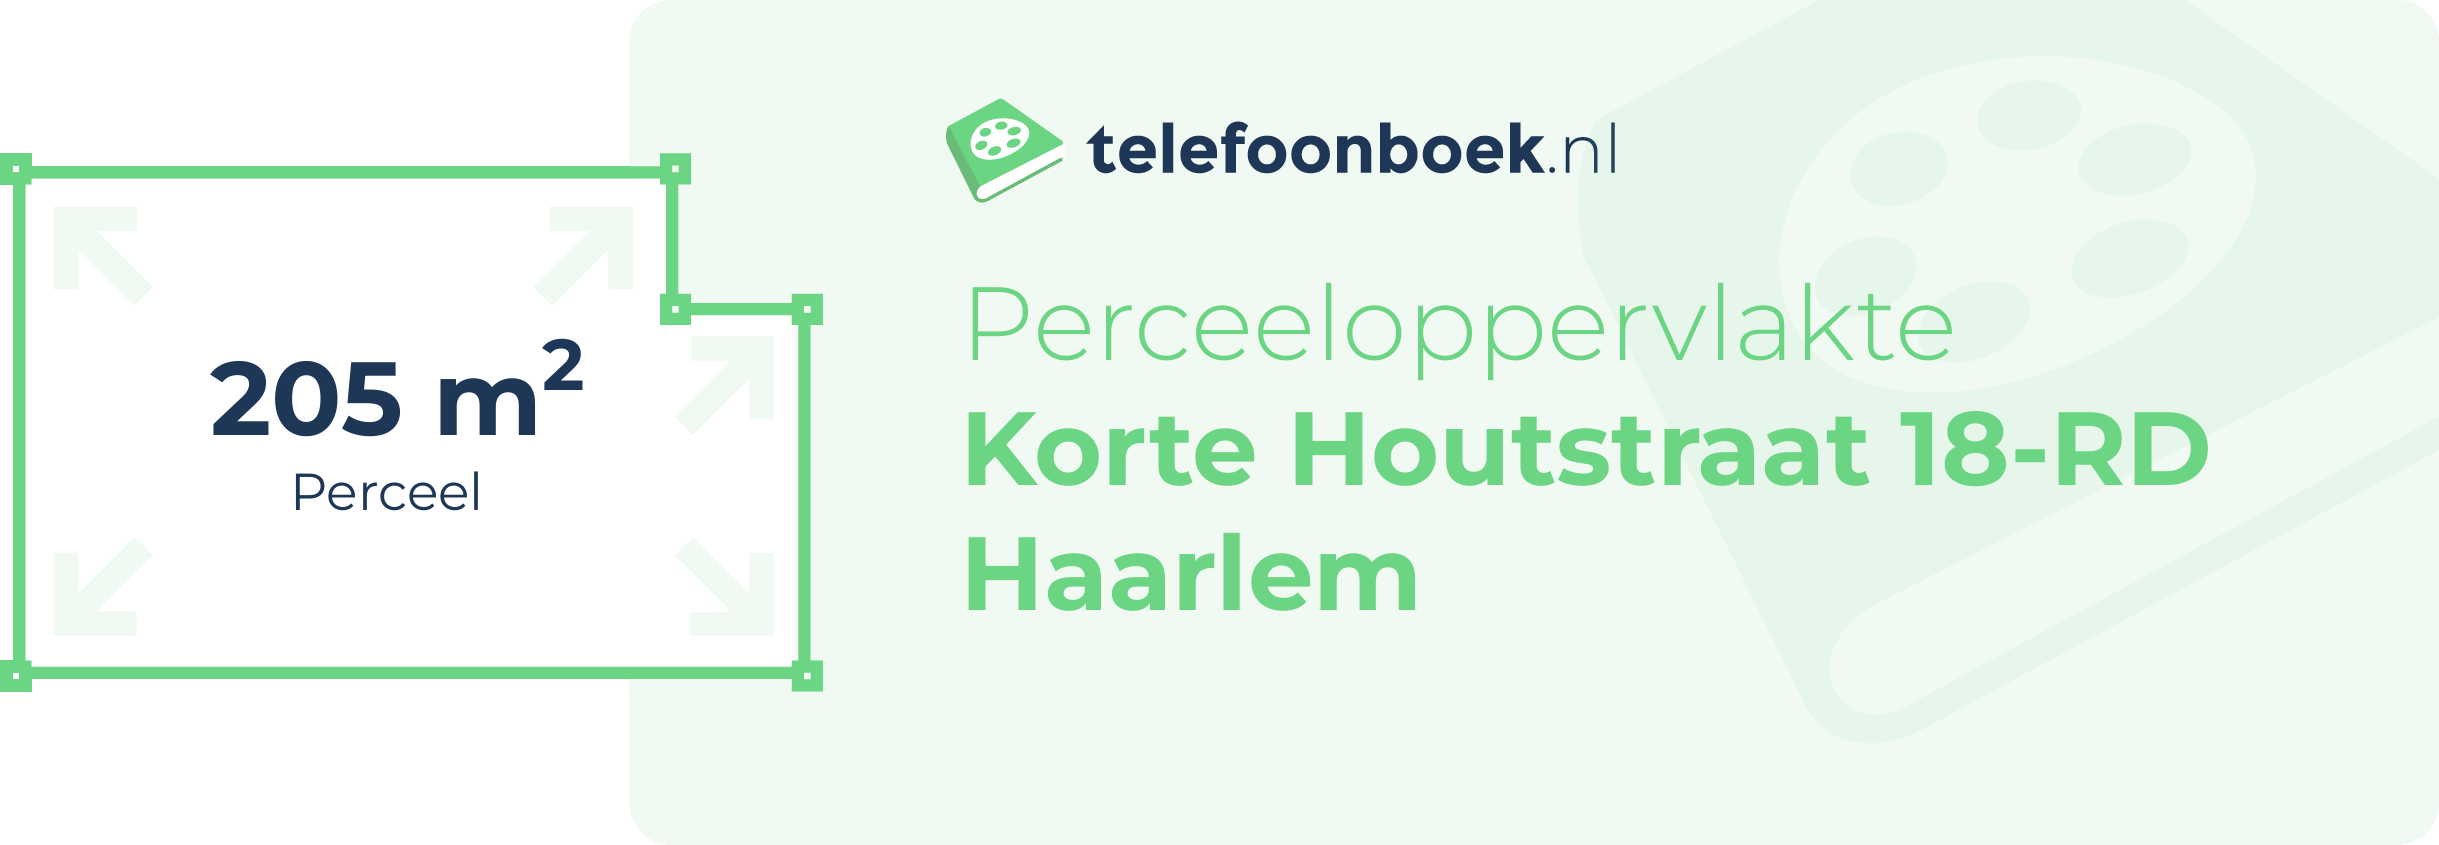 Perceeloppervlakte Korte Houtstraat 18-RD Haarlem